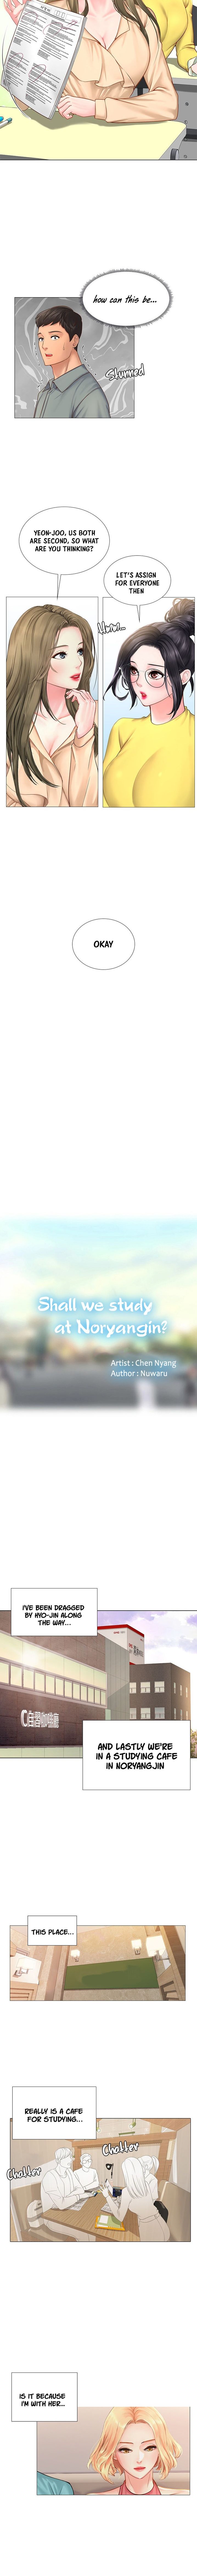 Should I Study at Noryangjin? - Chapter 18 Page 6